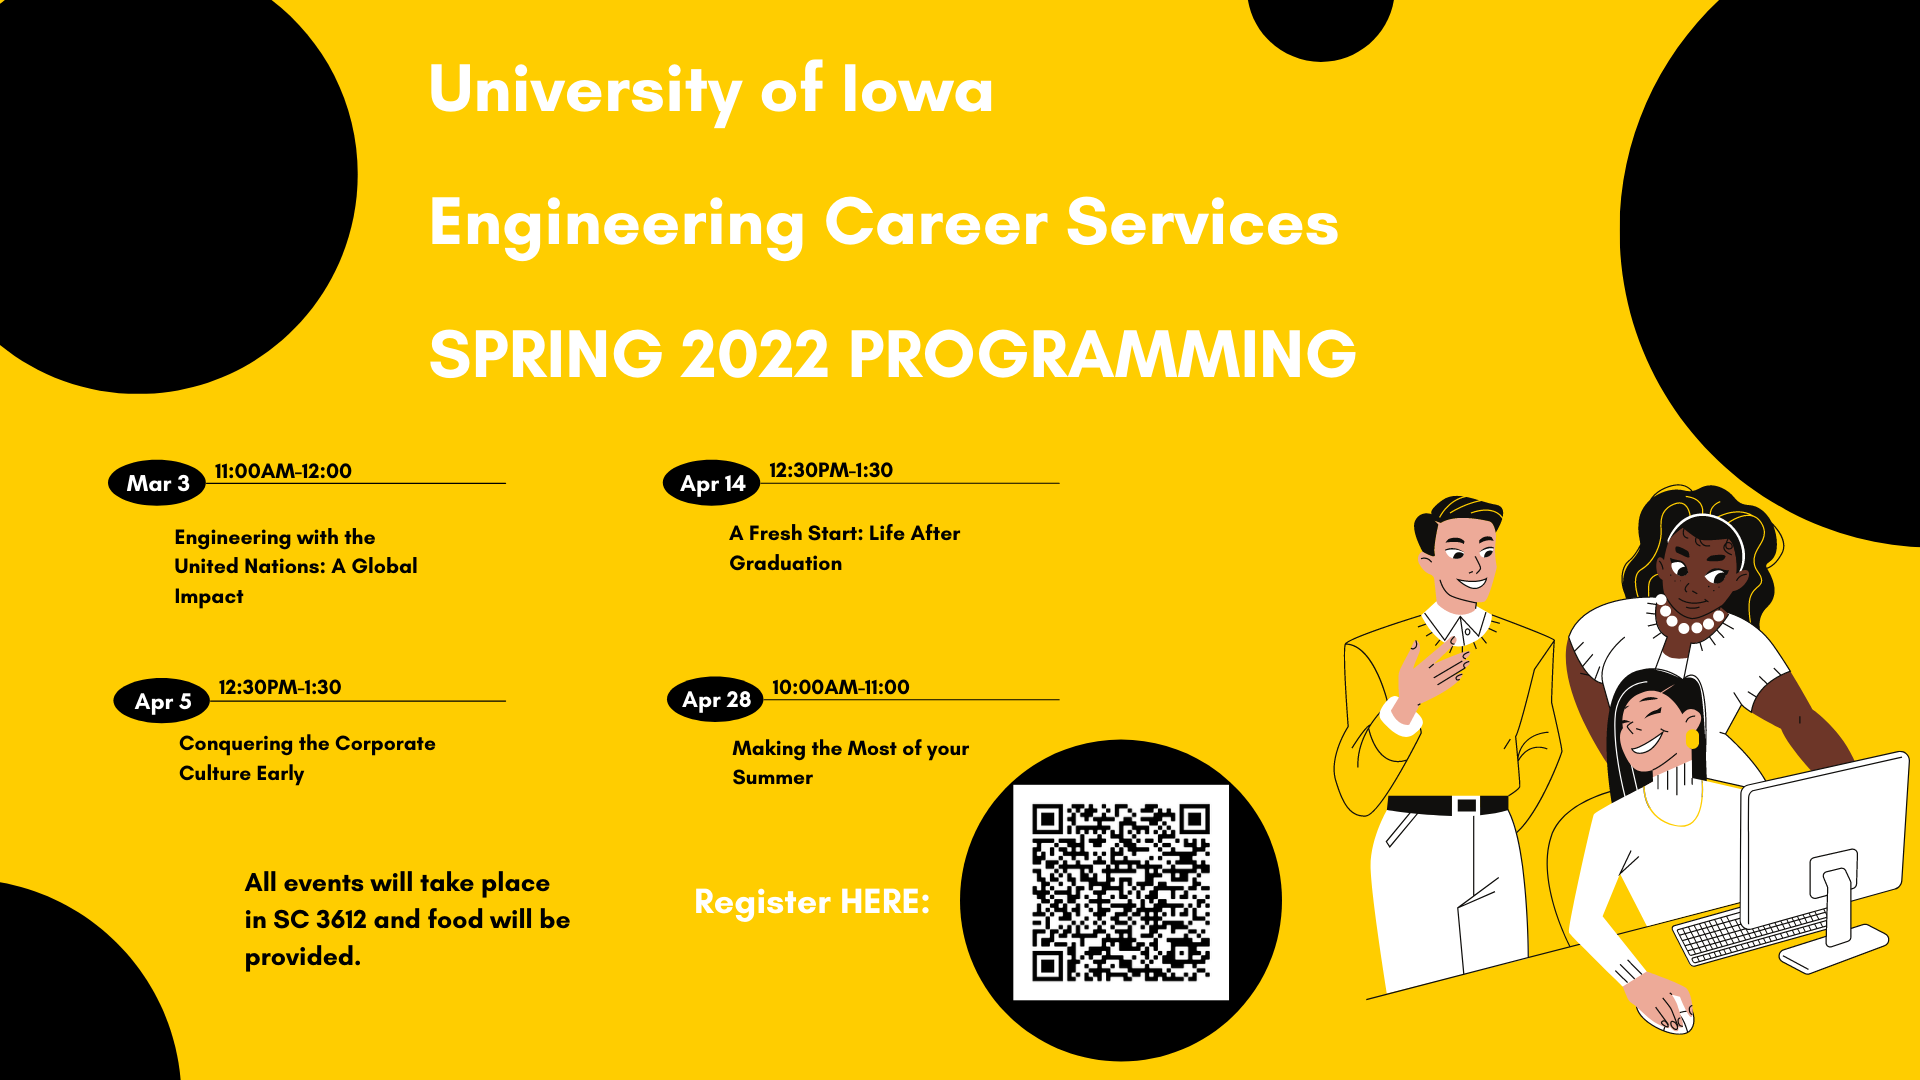 Engineering Career Services Spring 2022 Programming